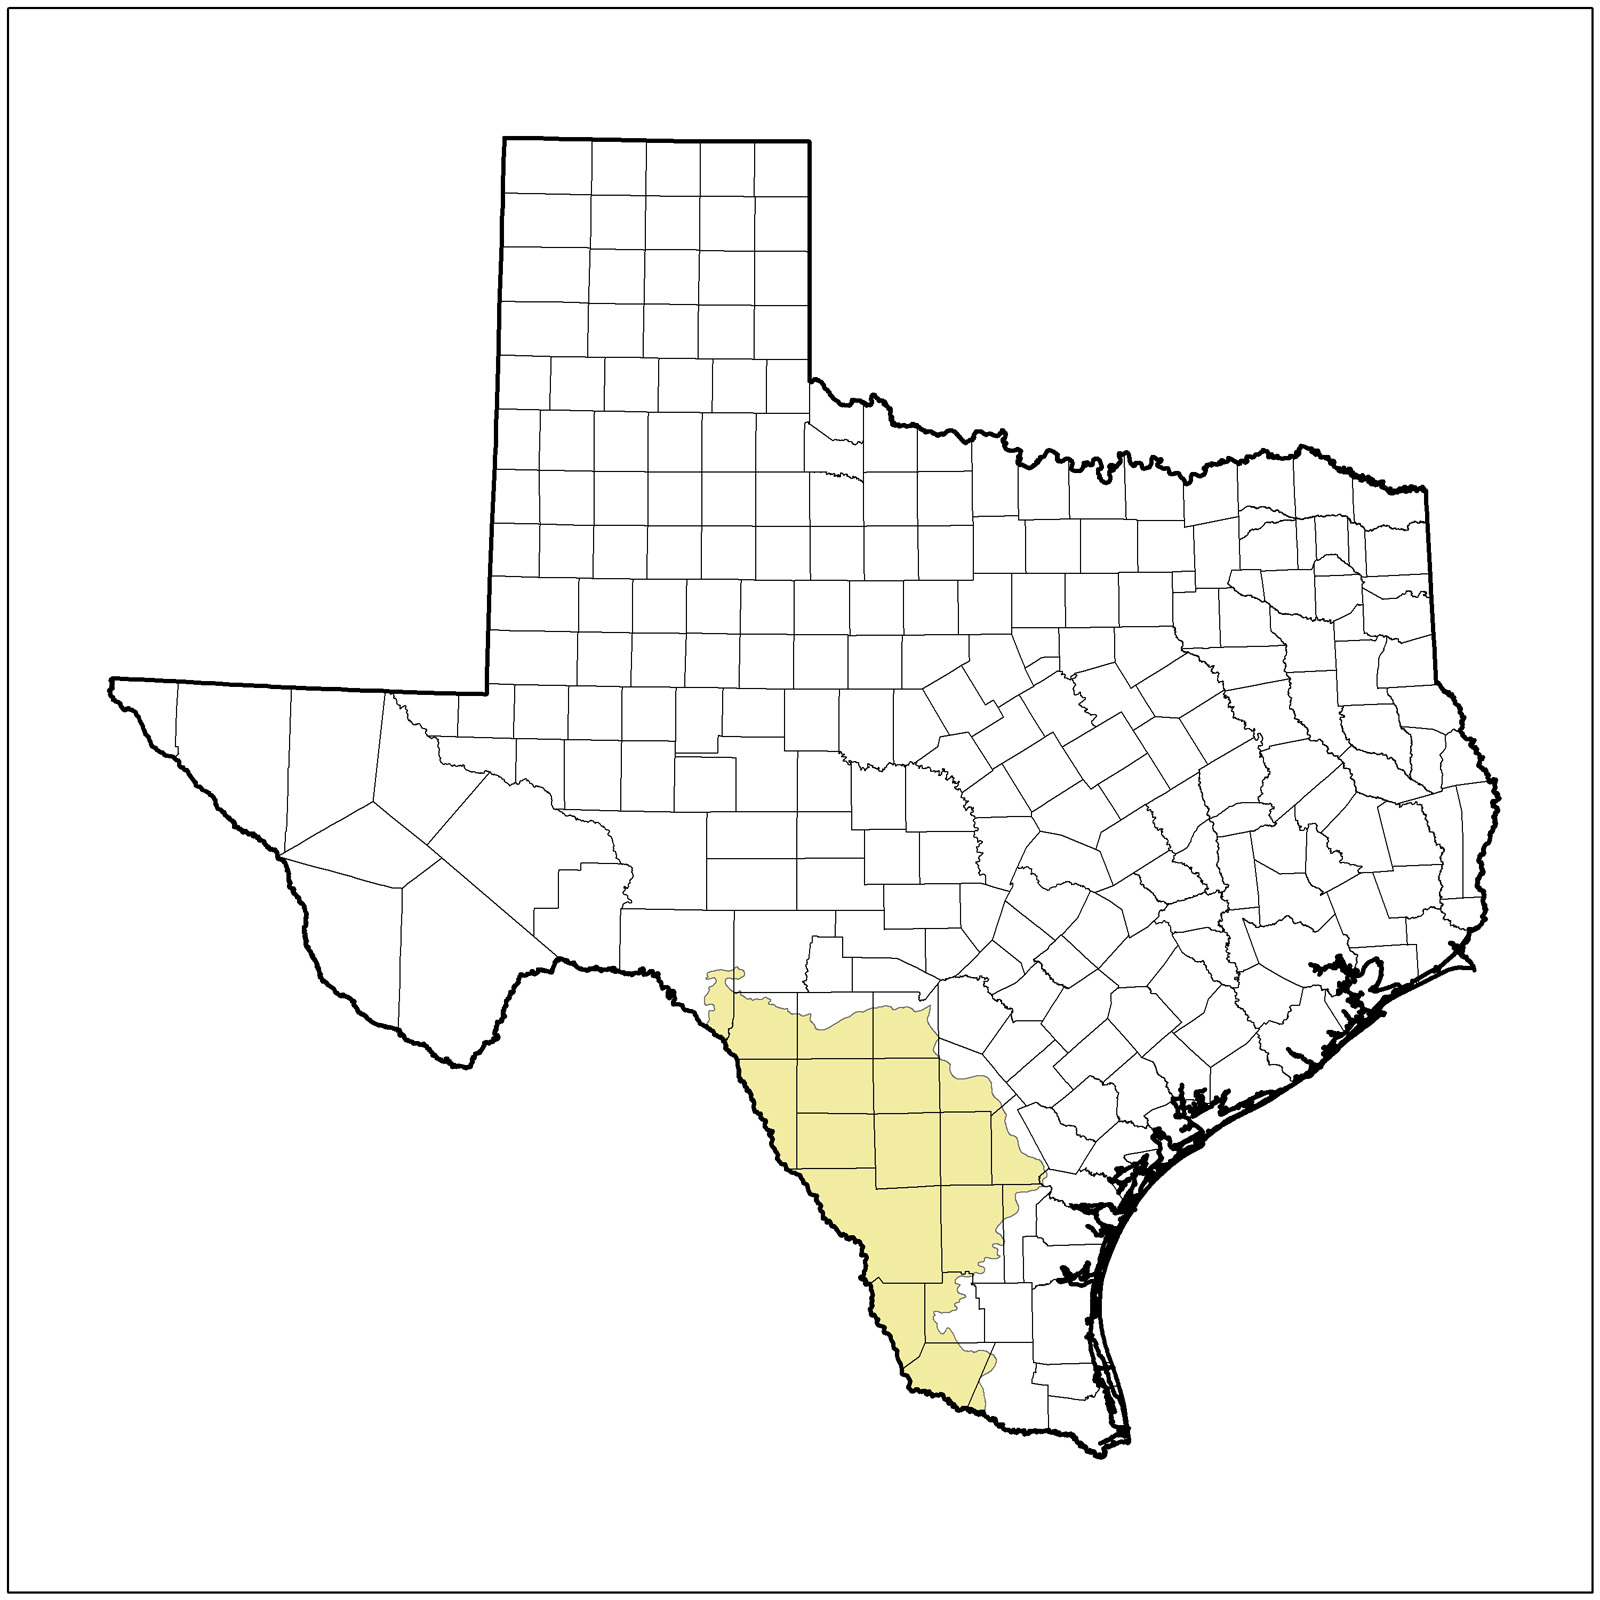 Southern Texas Plains Ecoregion